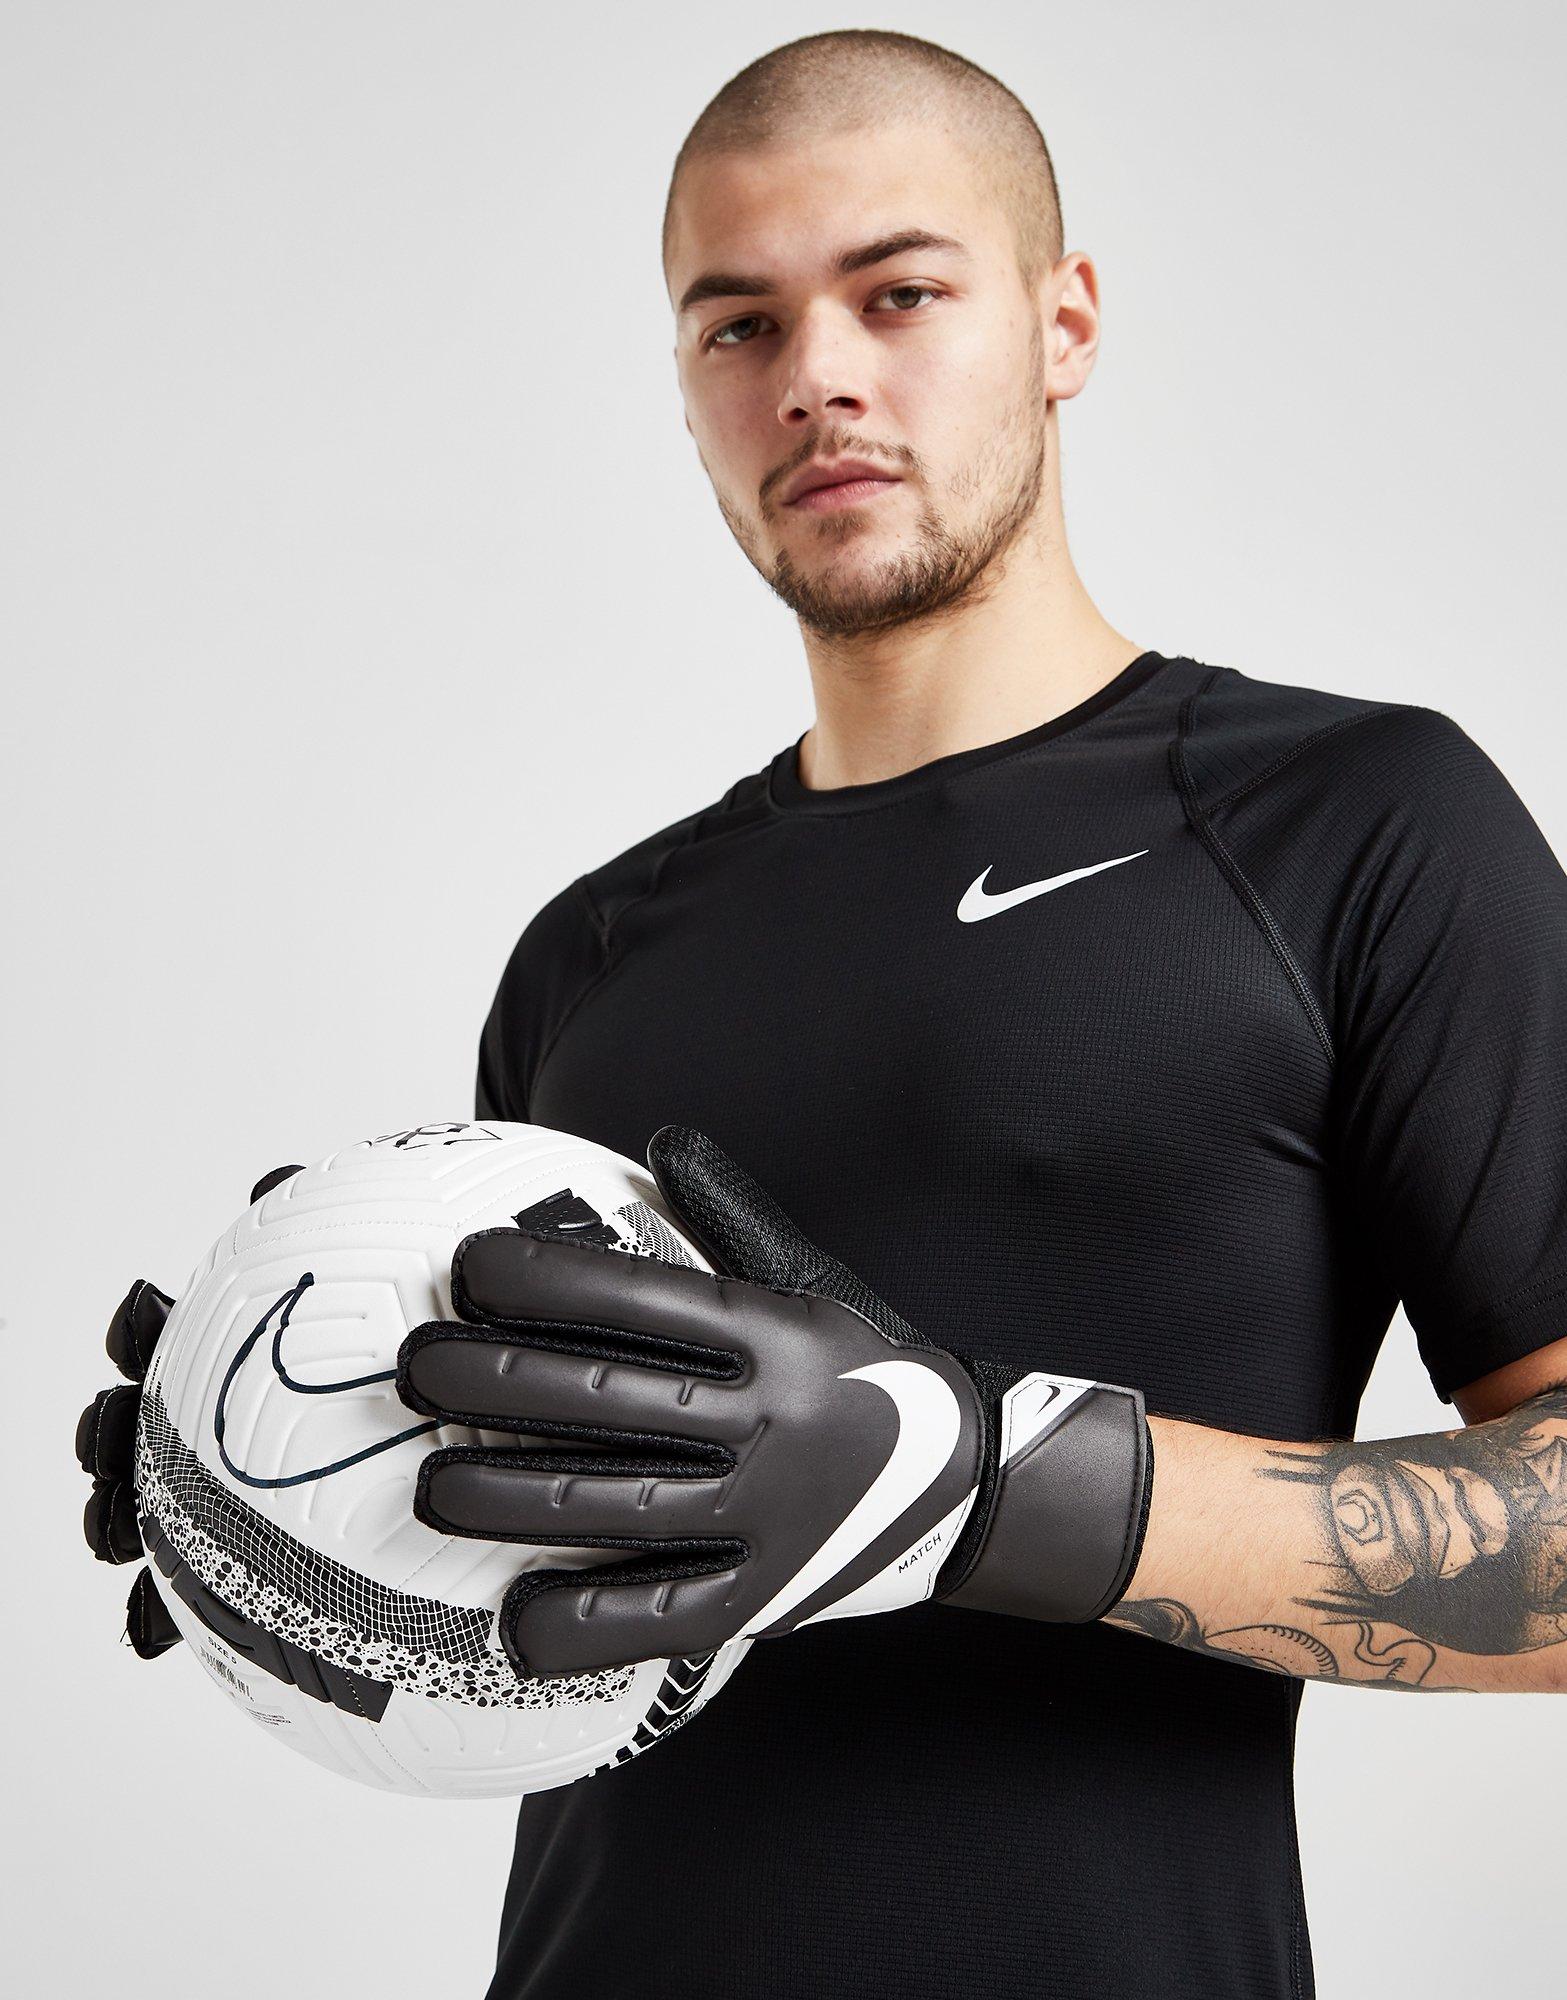 Nike guantes de portero Match 20 Negro JD Sports España